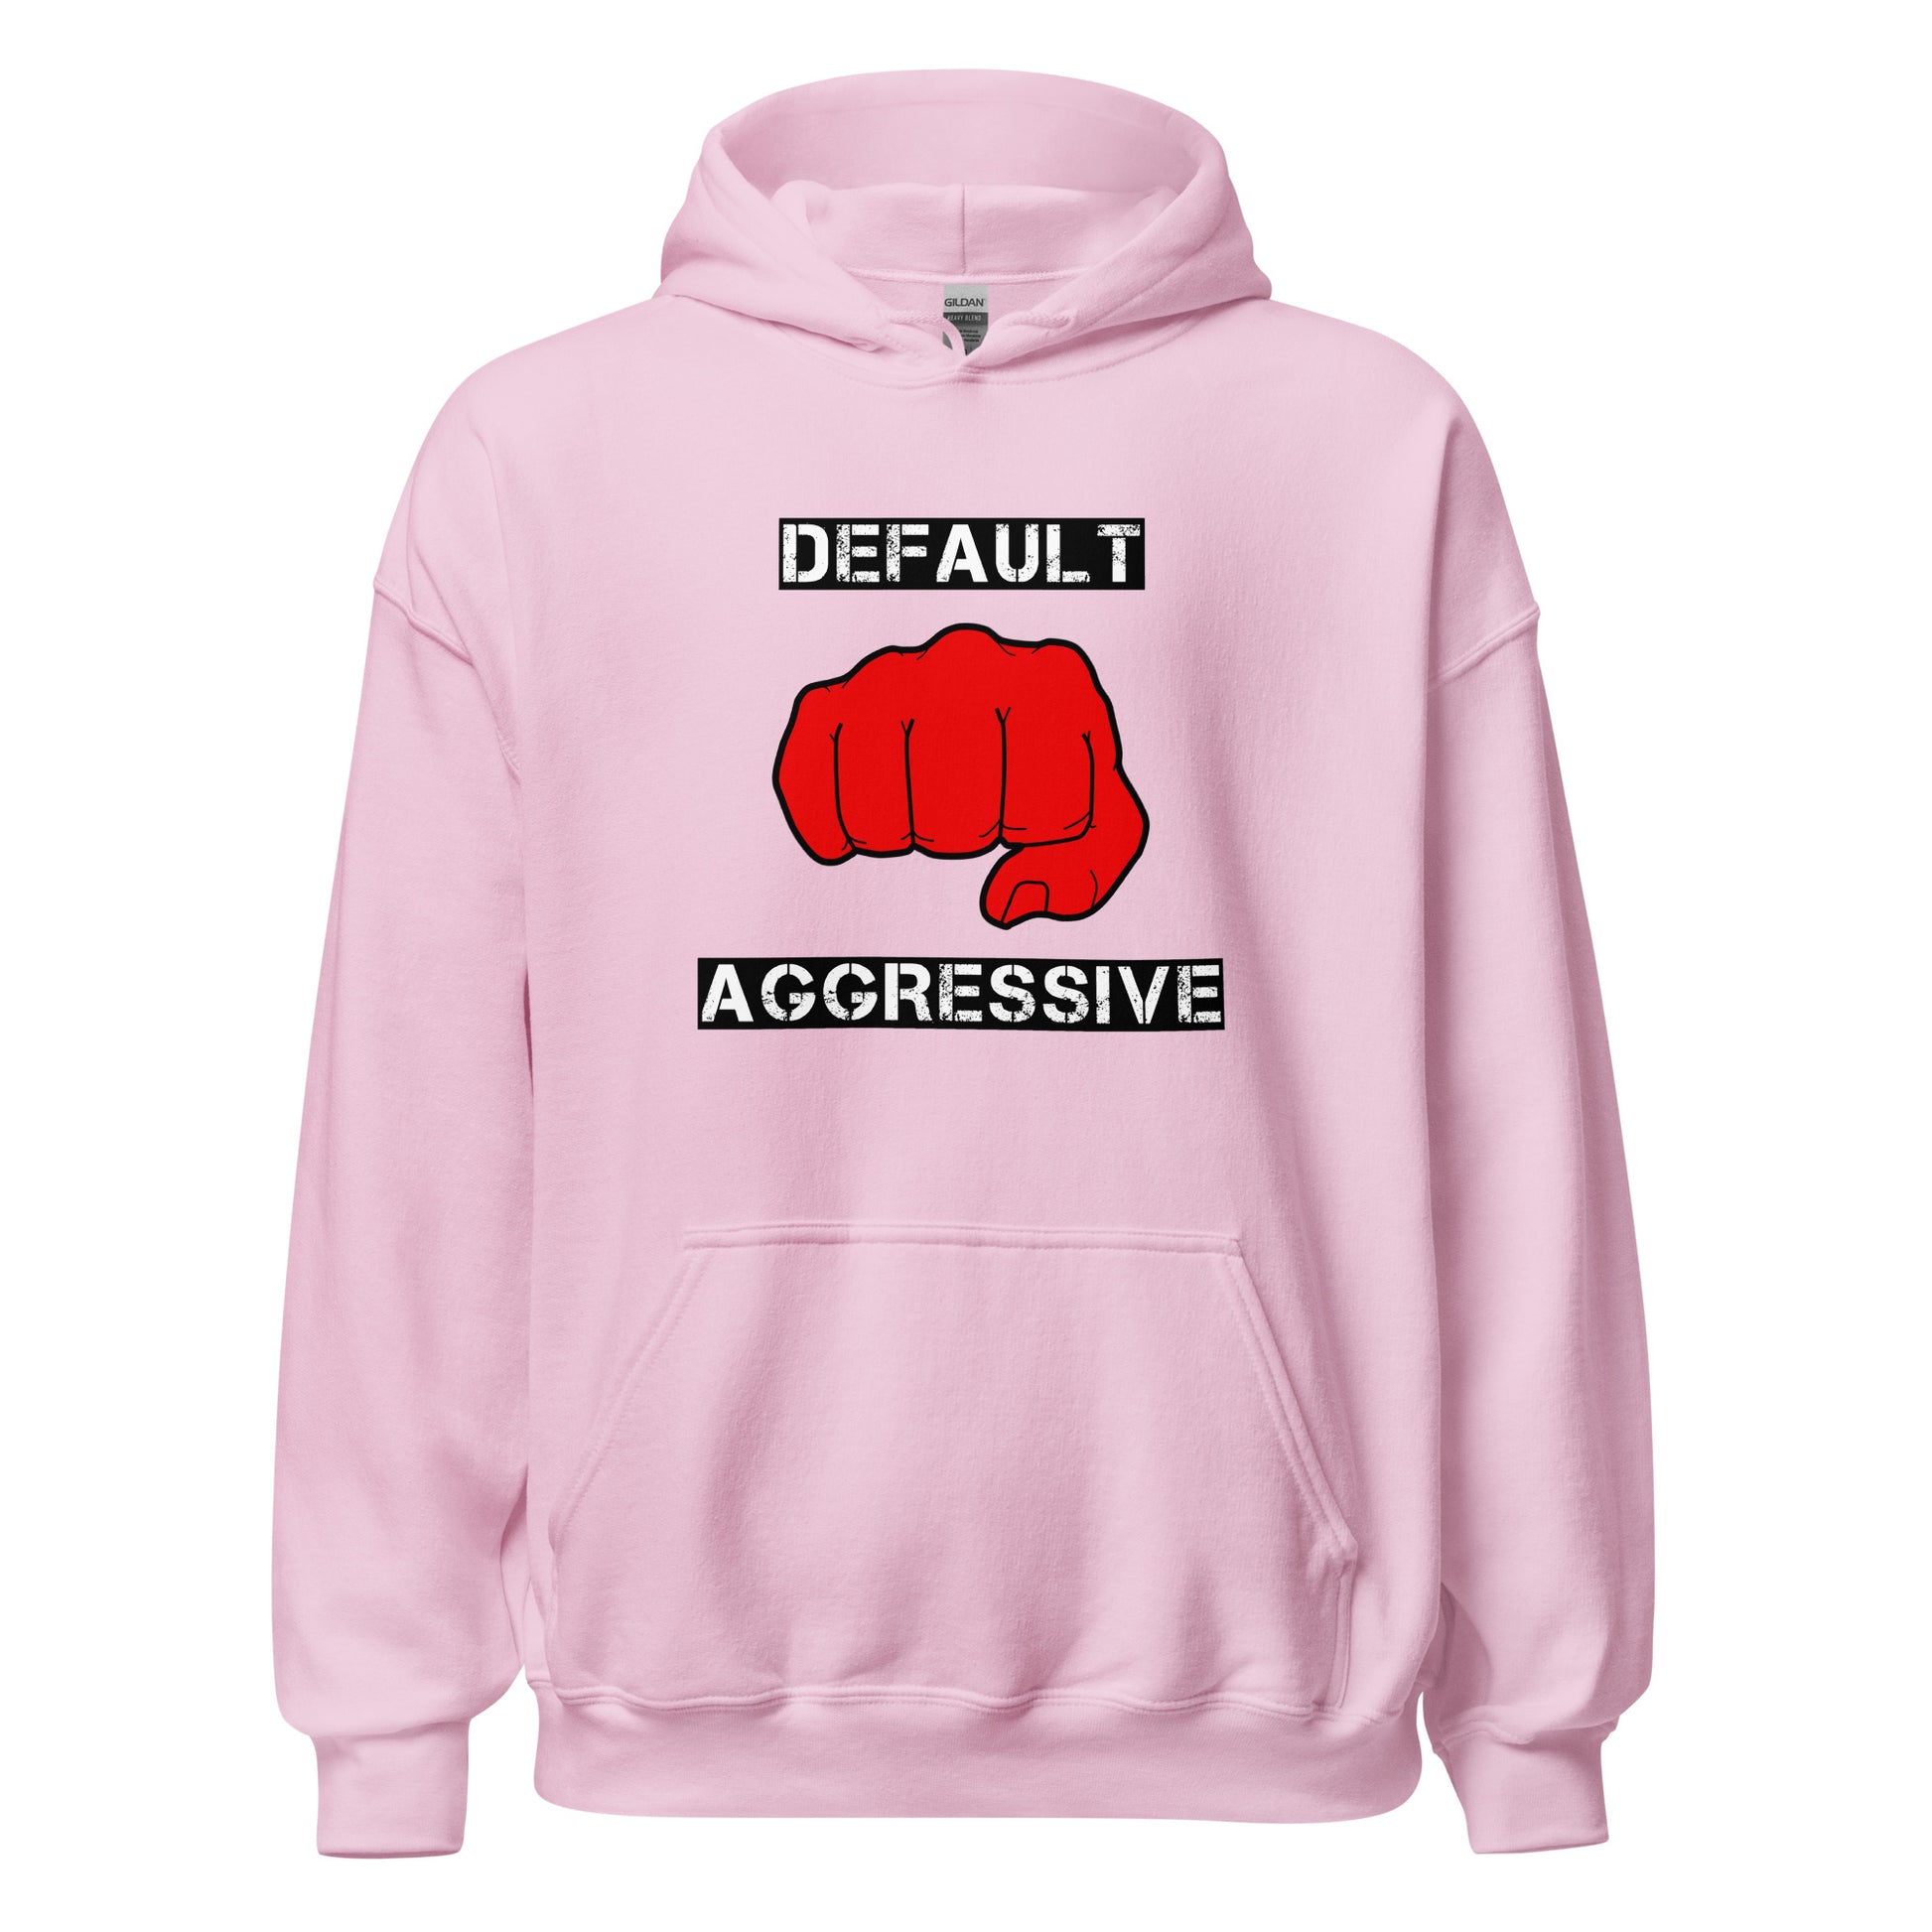 Default Aggressive Hoodie in Light Pink